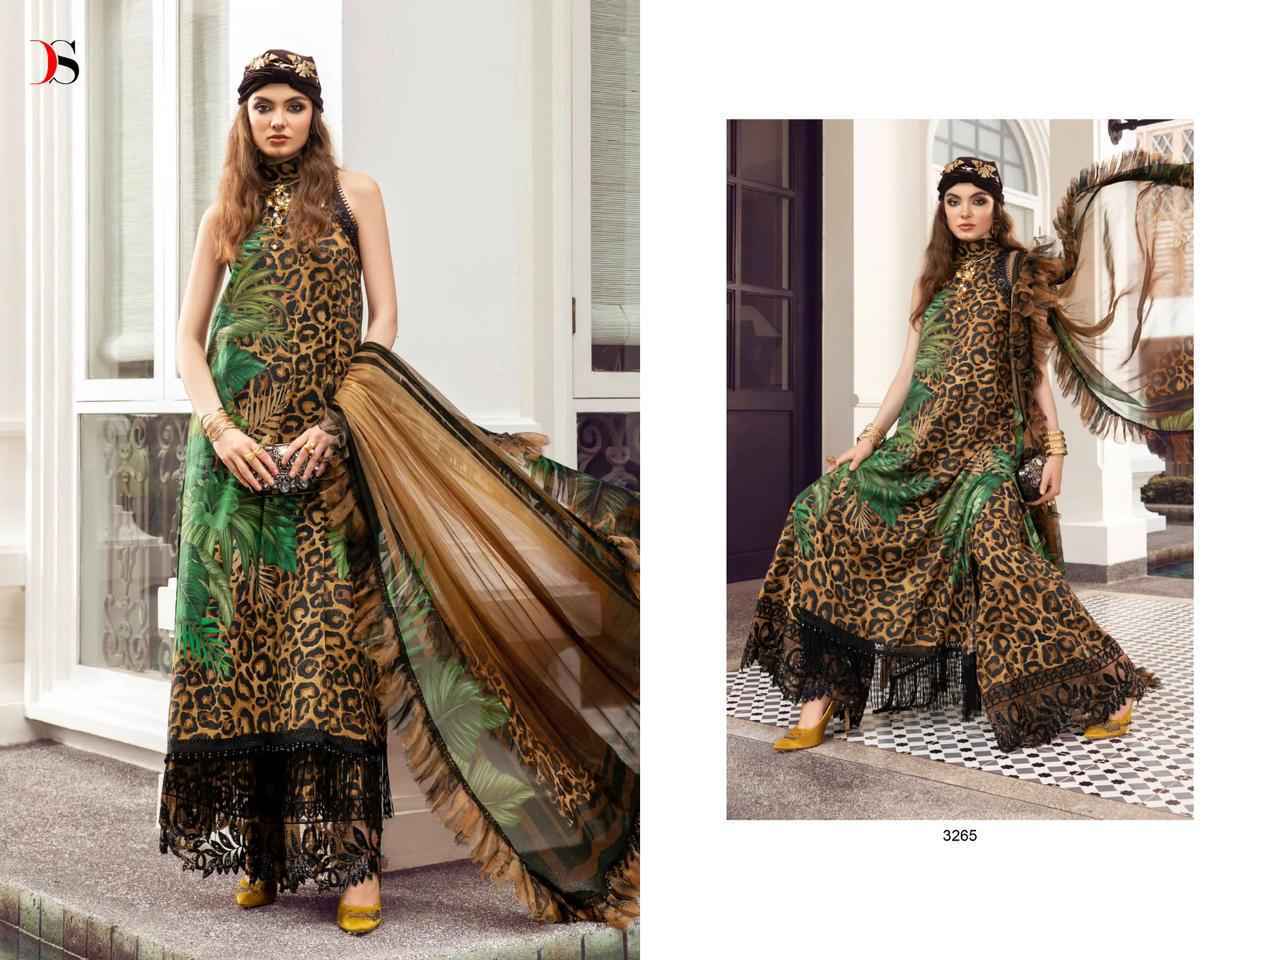 Deepsy Maria B M Print Vol 5 Cotton Dress Material 7 pcs Catalogue Chiffon Dupatta